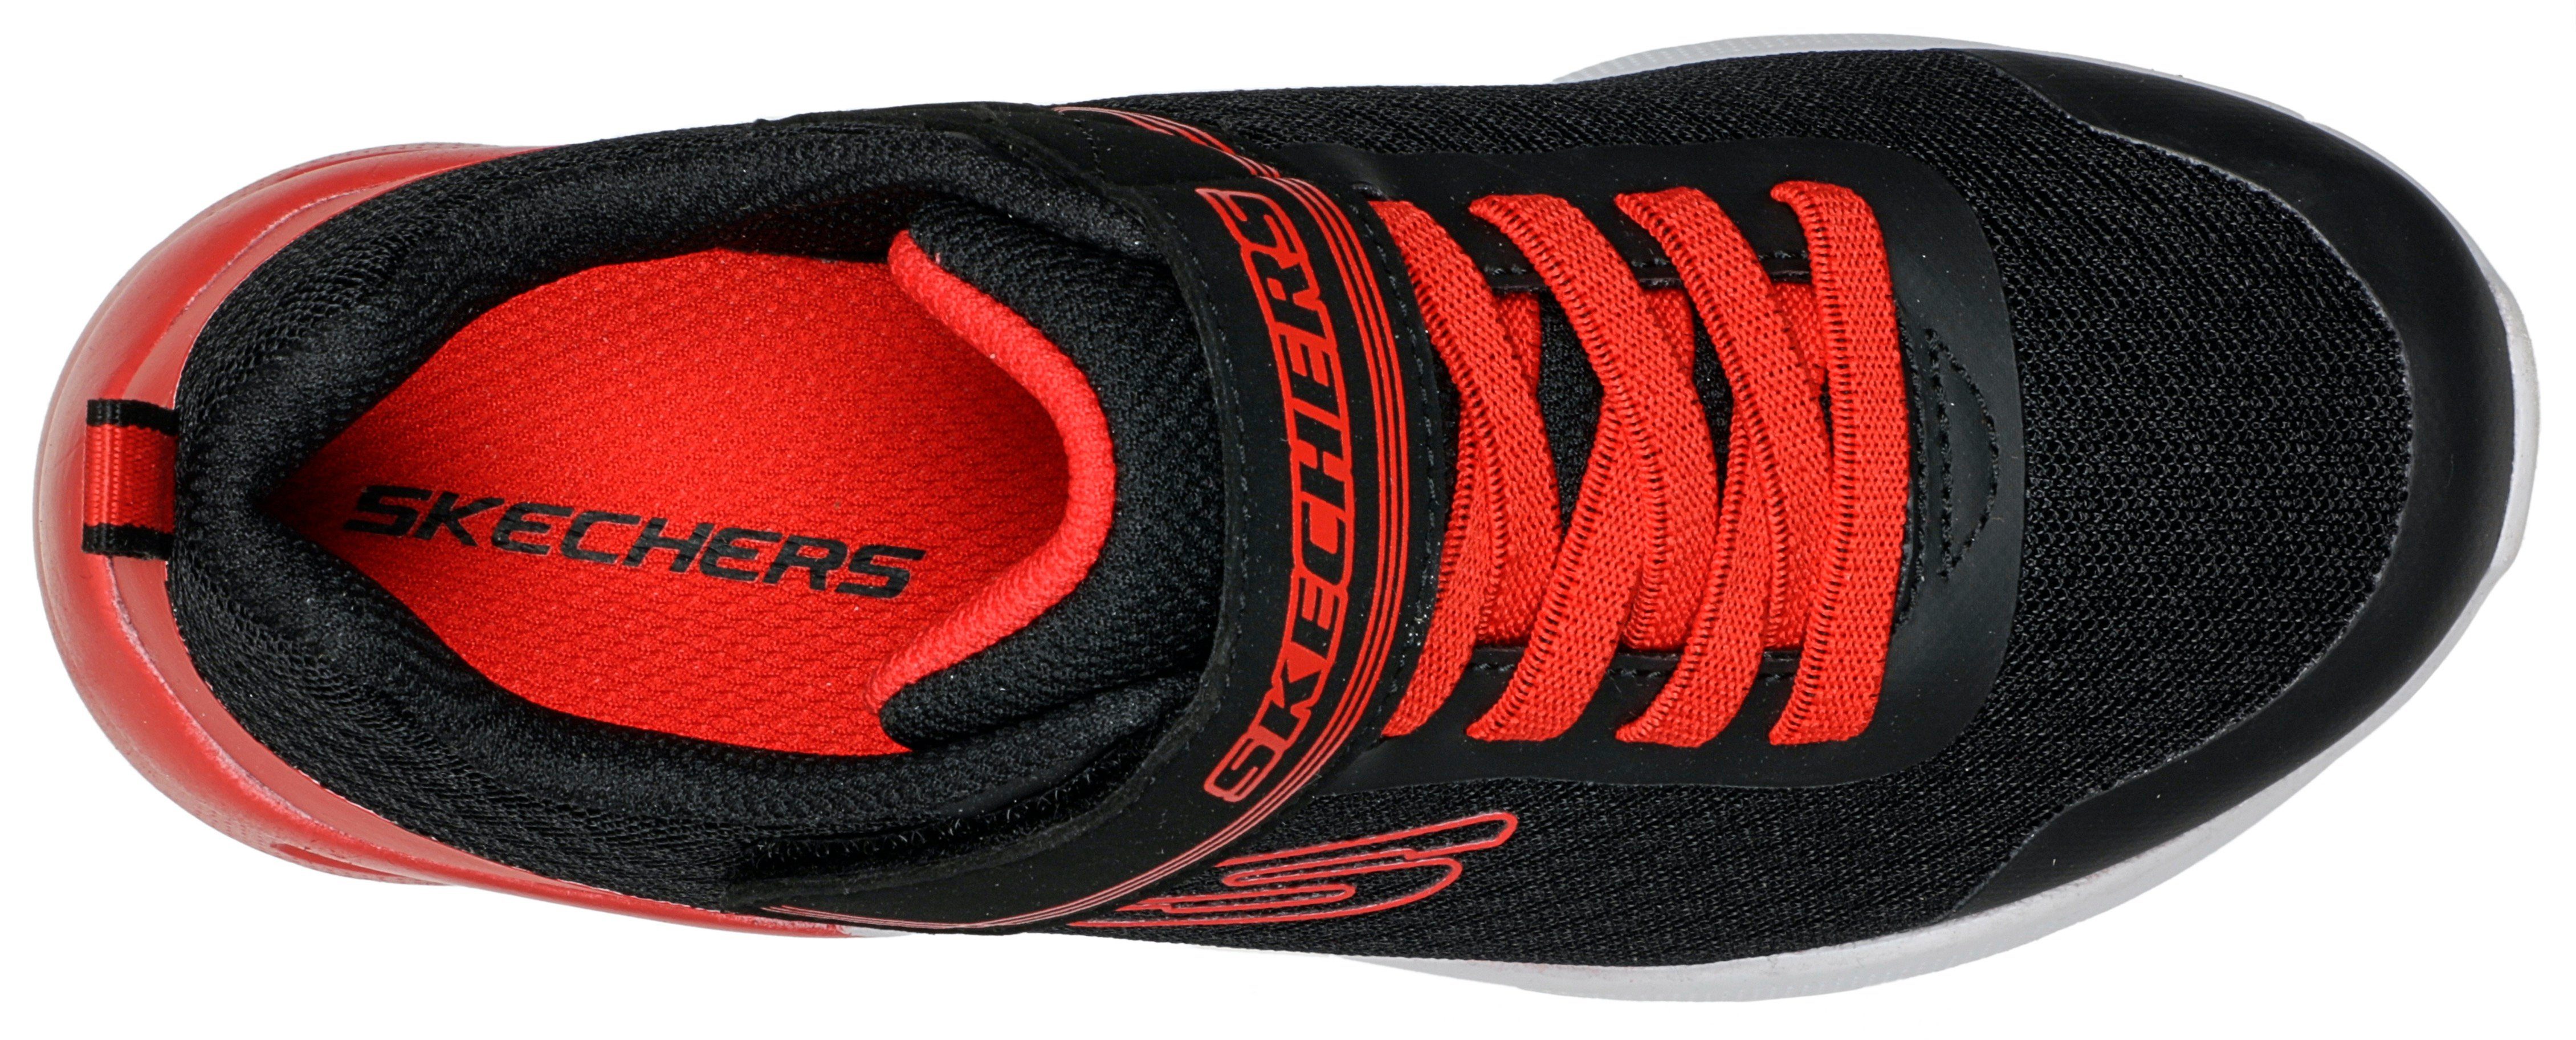 Farbkombination in MAX, schwarz-rot modischer MICROSPEC Skechers Kids Sneaker